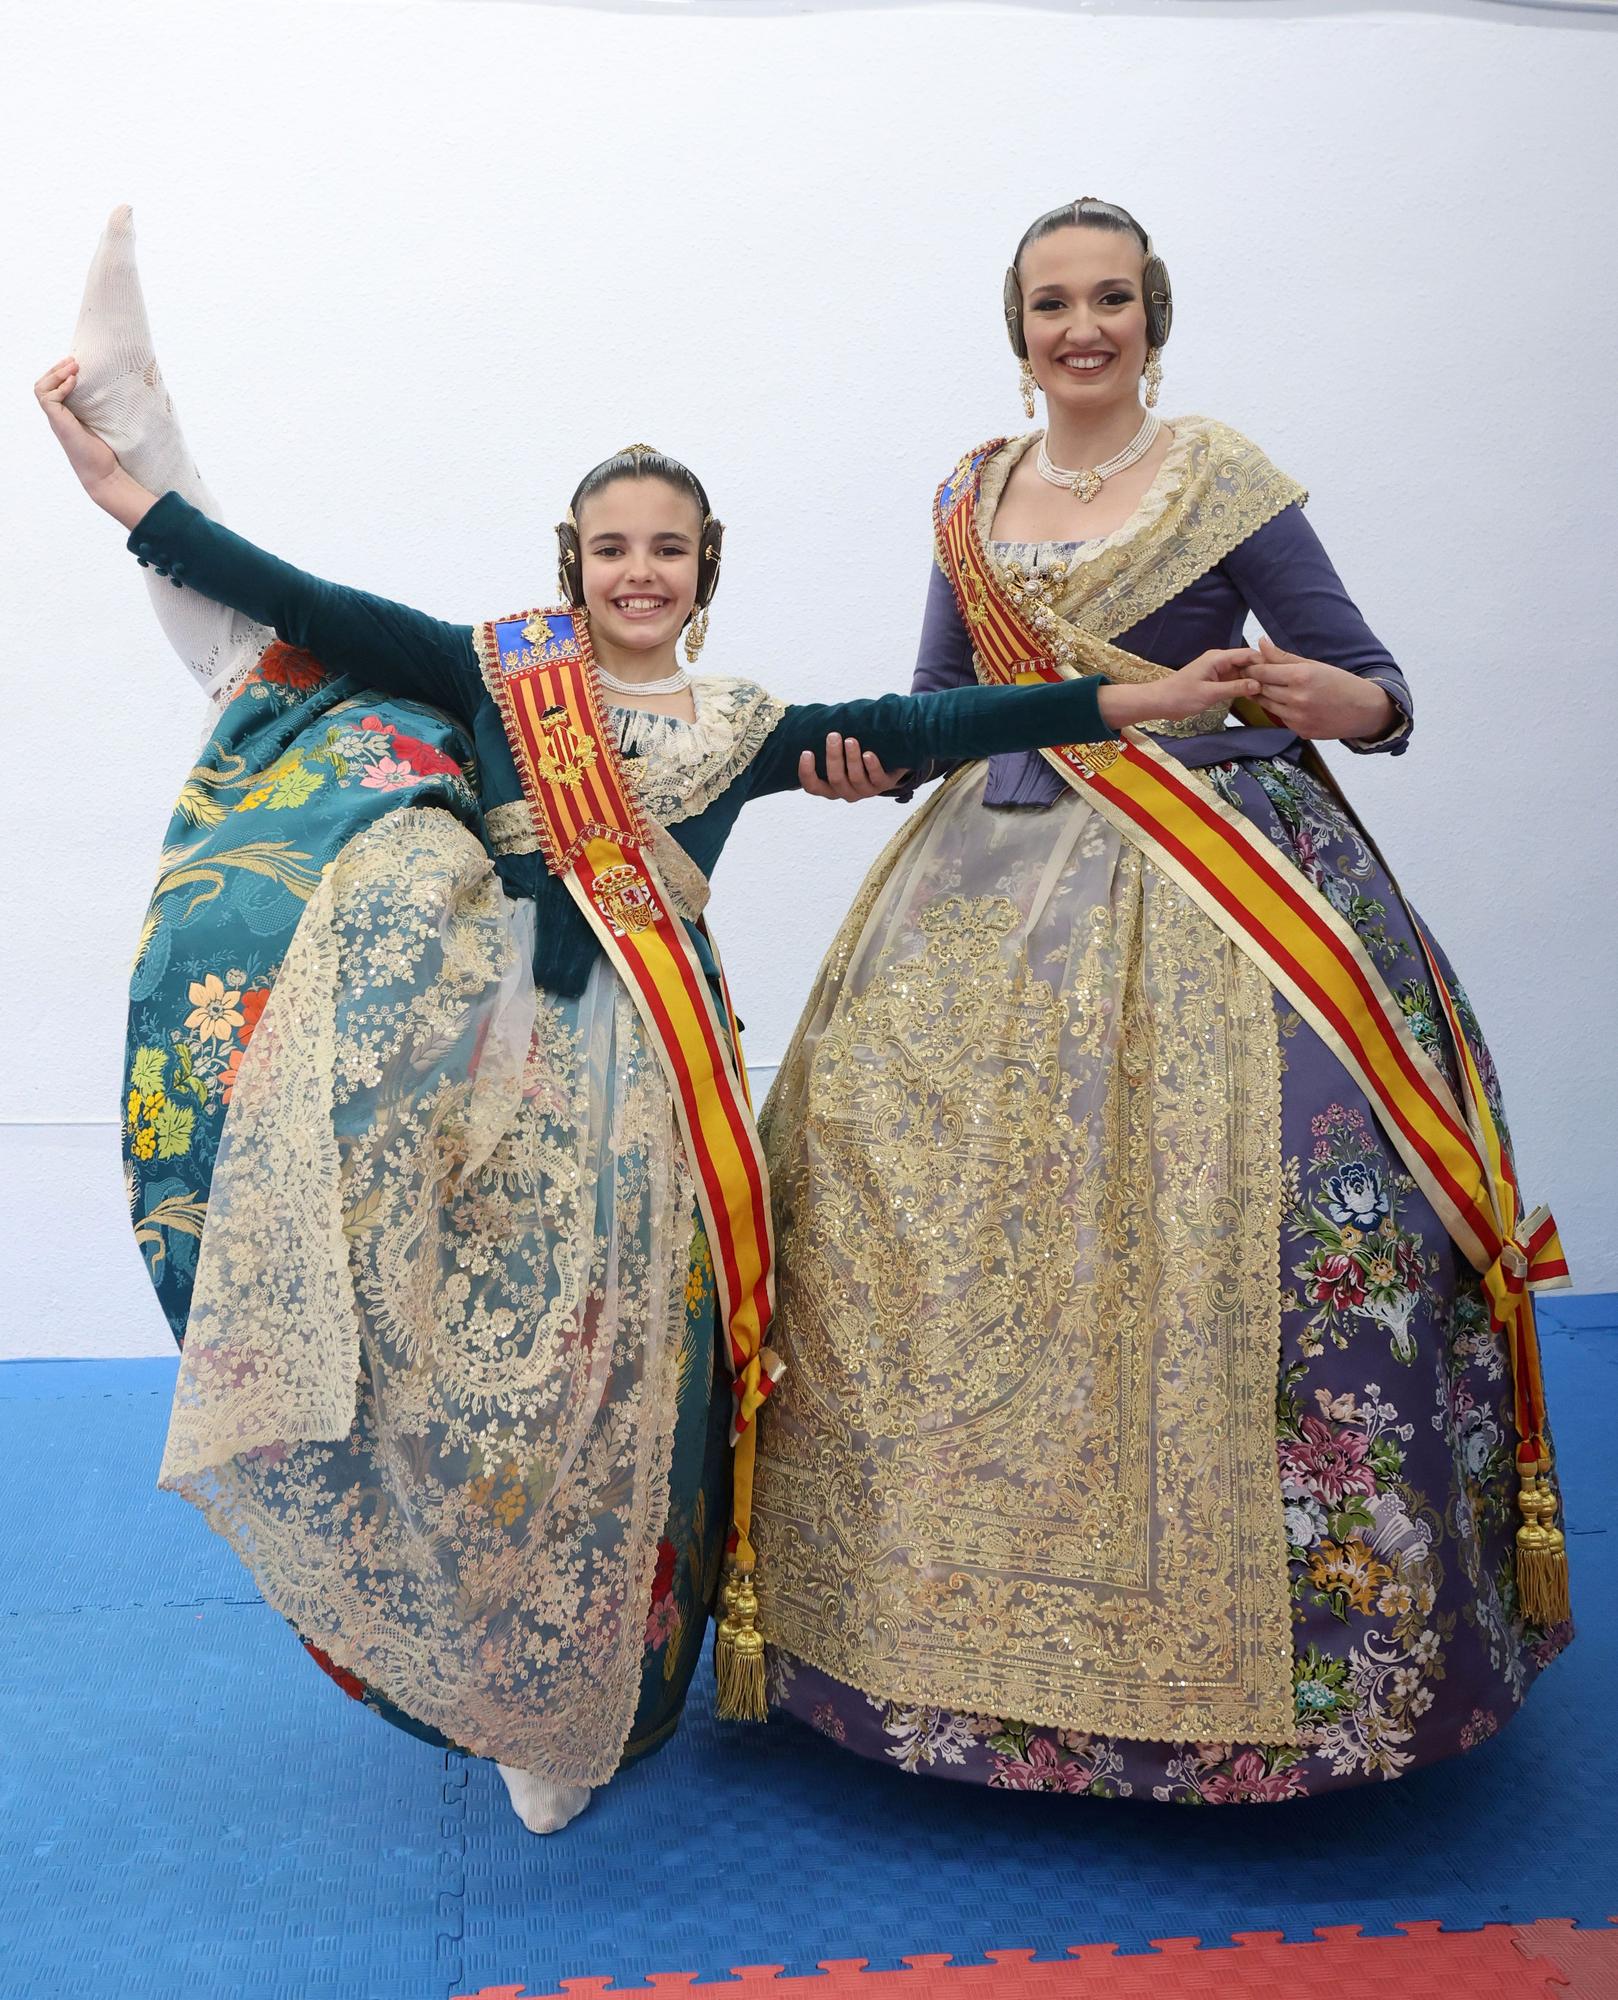 Paula Nieto Medina, junto a Laura Mengó Hernández, mostró su felixibilidad aún vestida de fallera